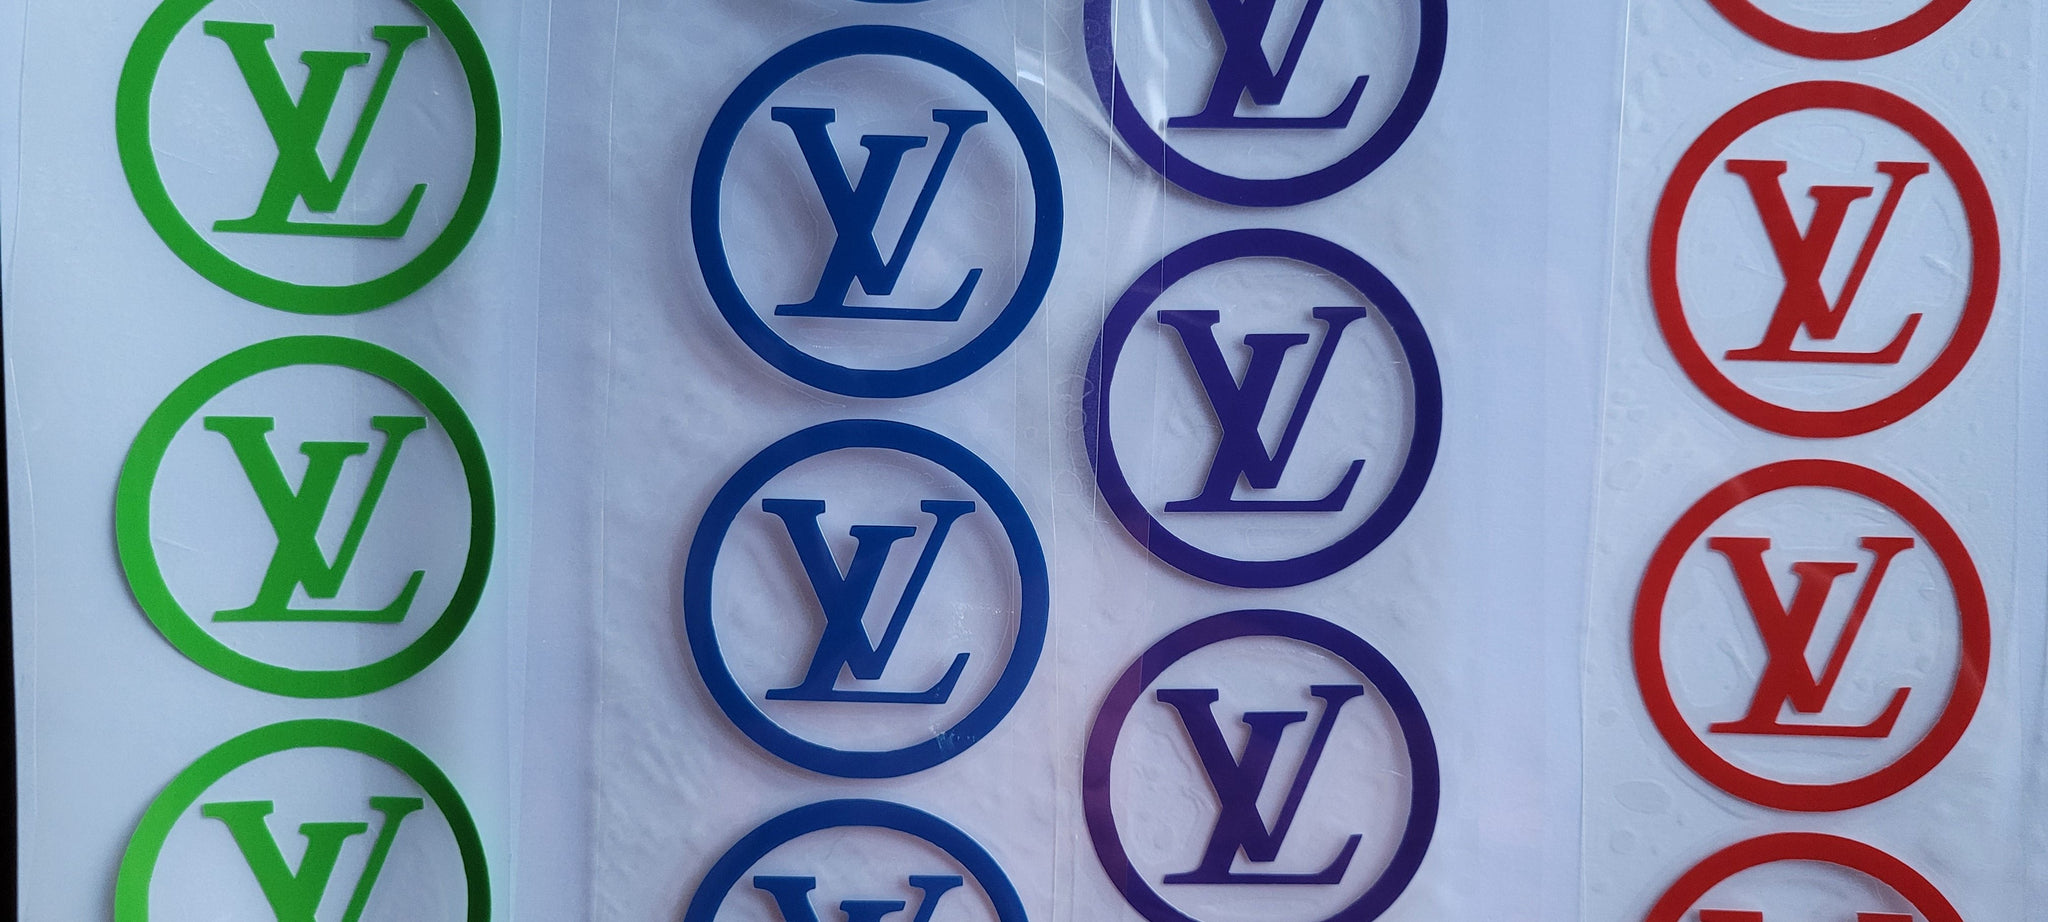 lv iron on patches logo